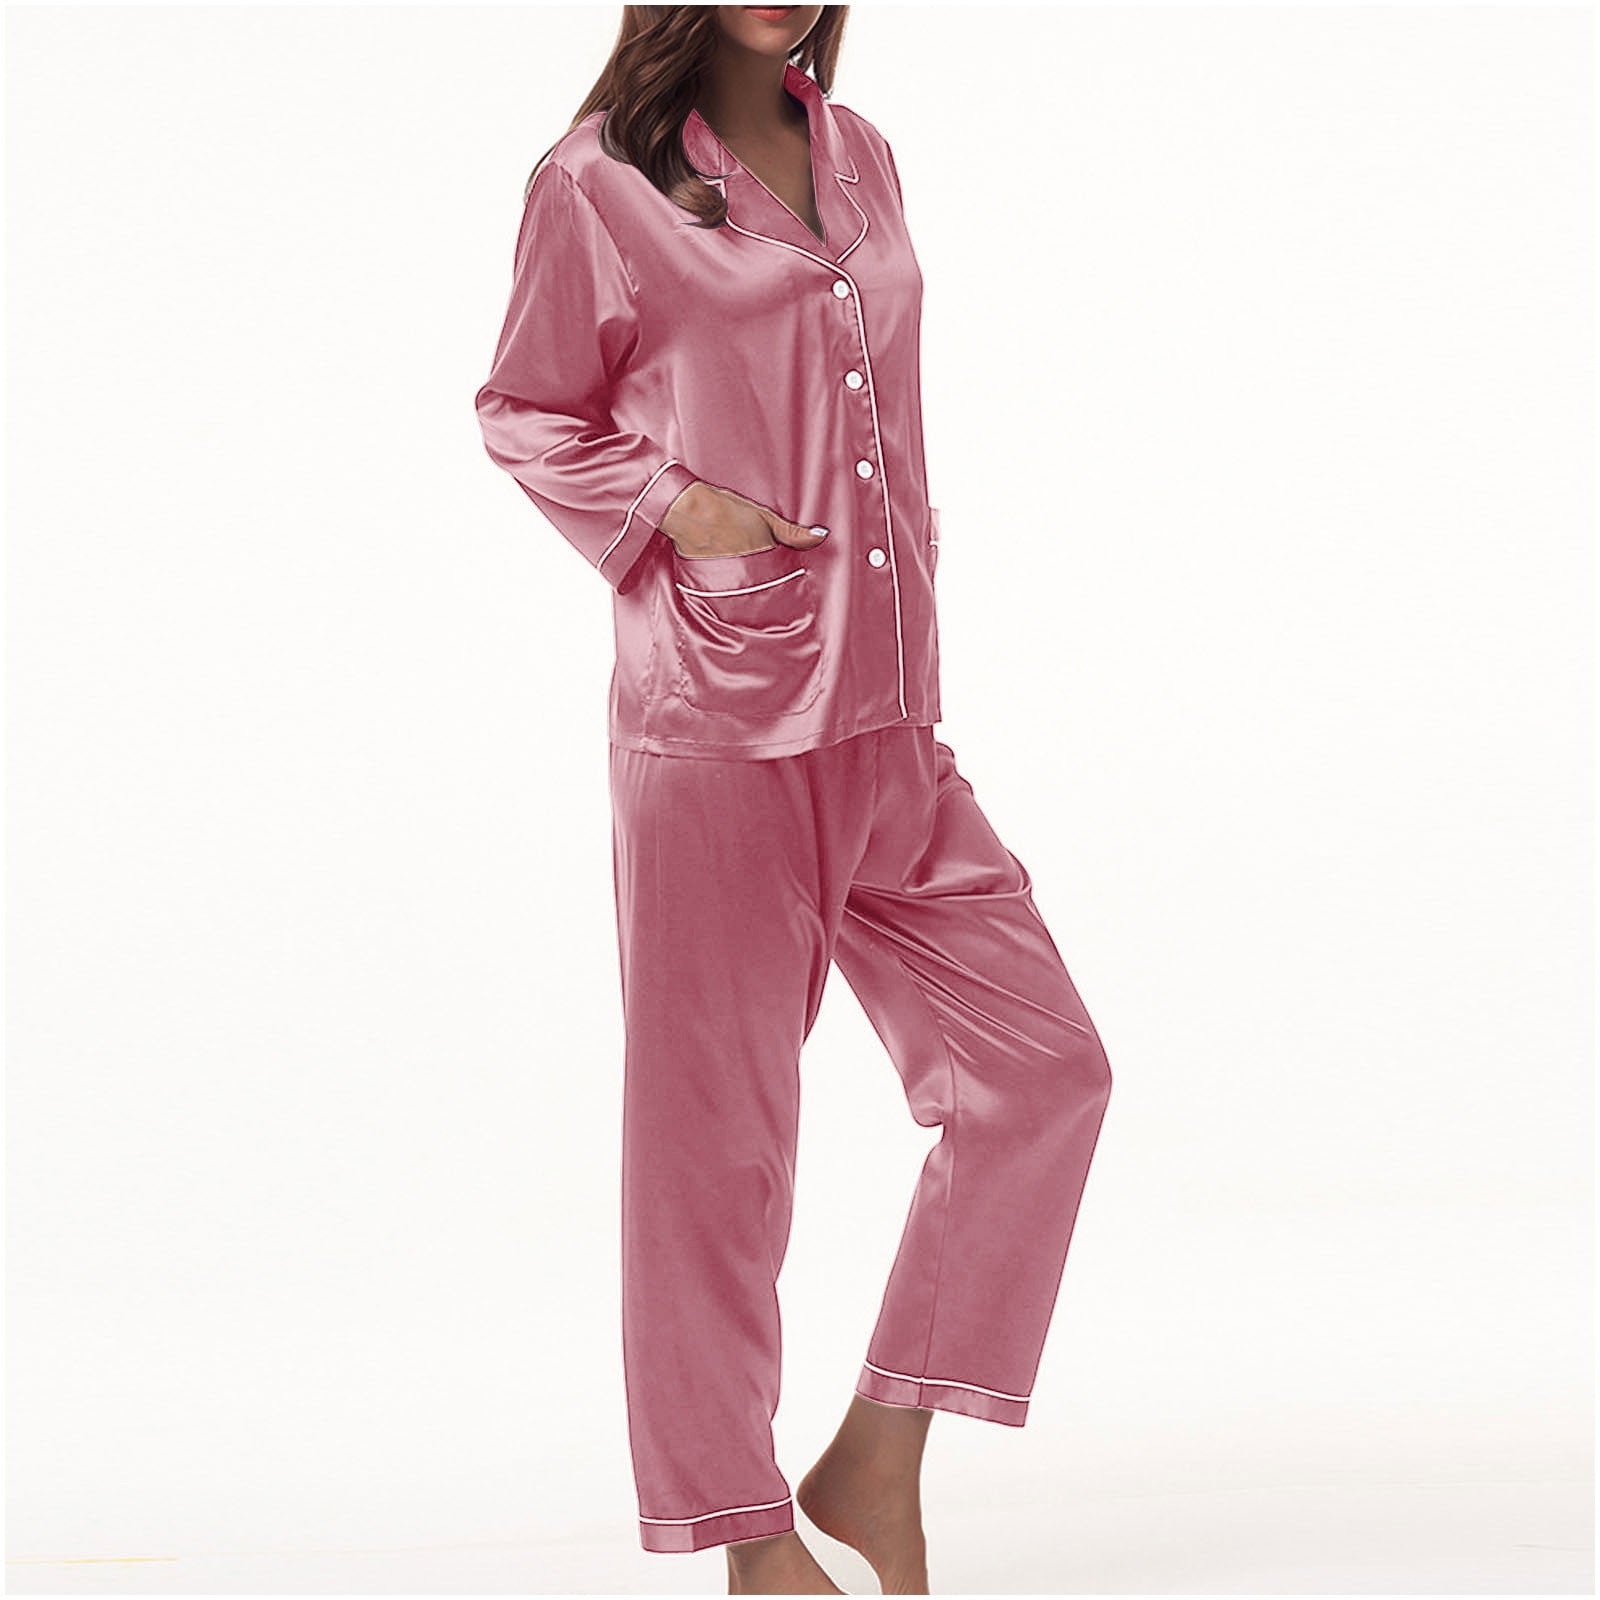 VALMASS Women's Silk Pajamas Sets Homewear Long Sleeve Button Down Nightshirt 2 Piece Sleepwear Loungewear with Pocket (xl, Hot Pink)